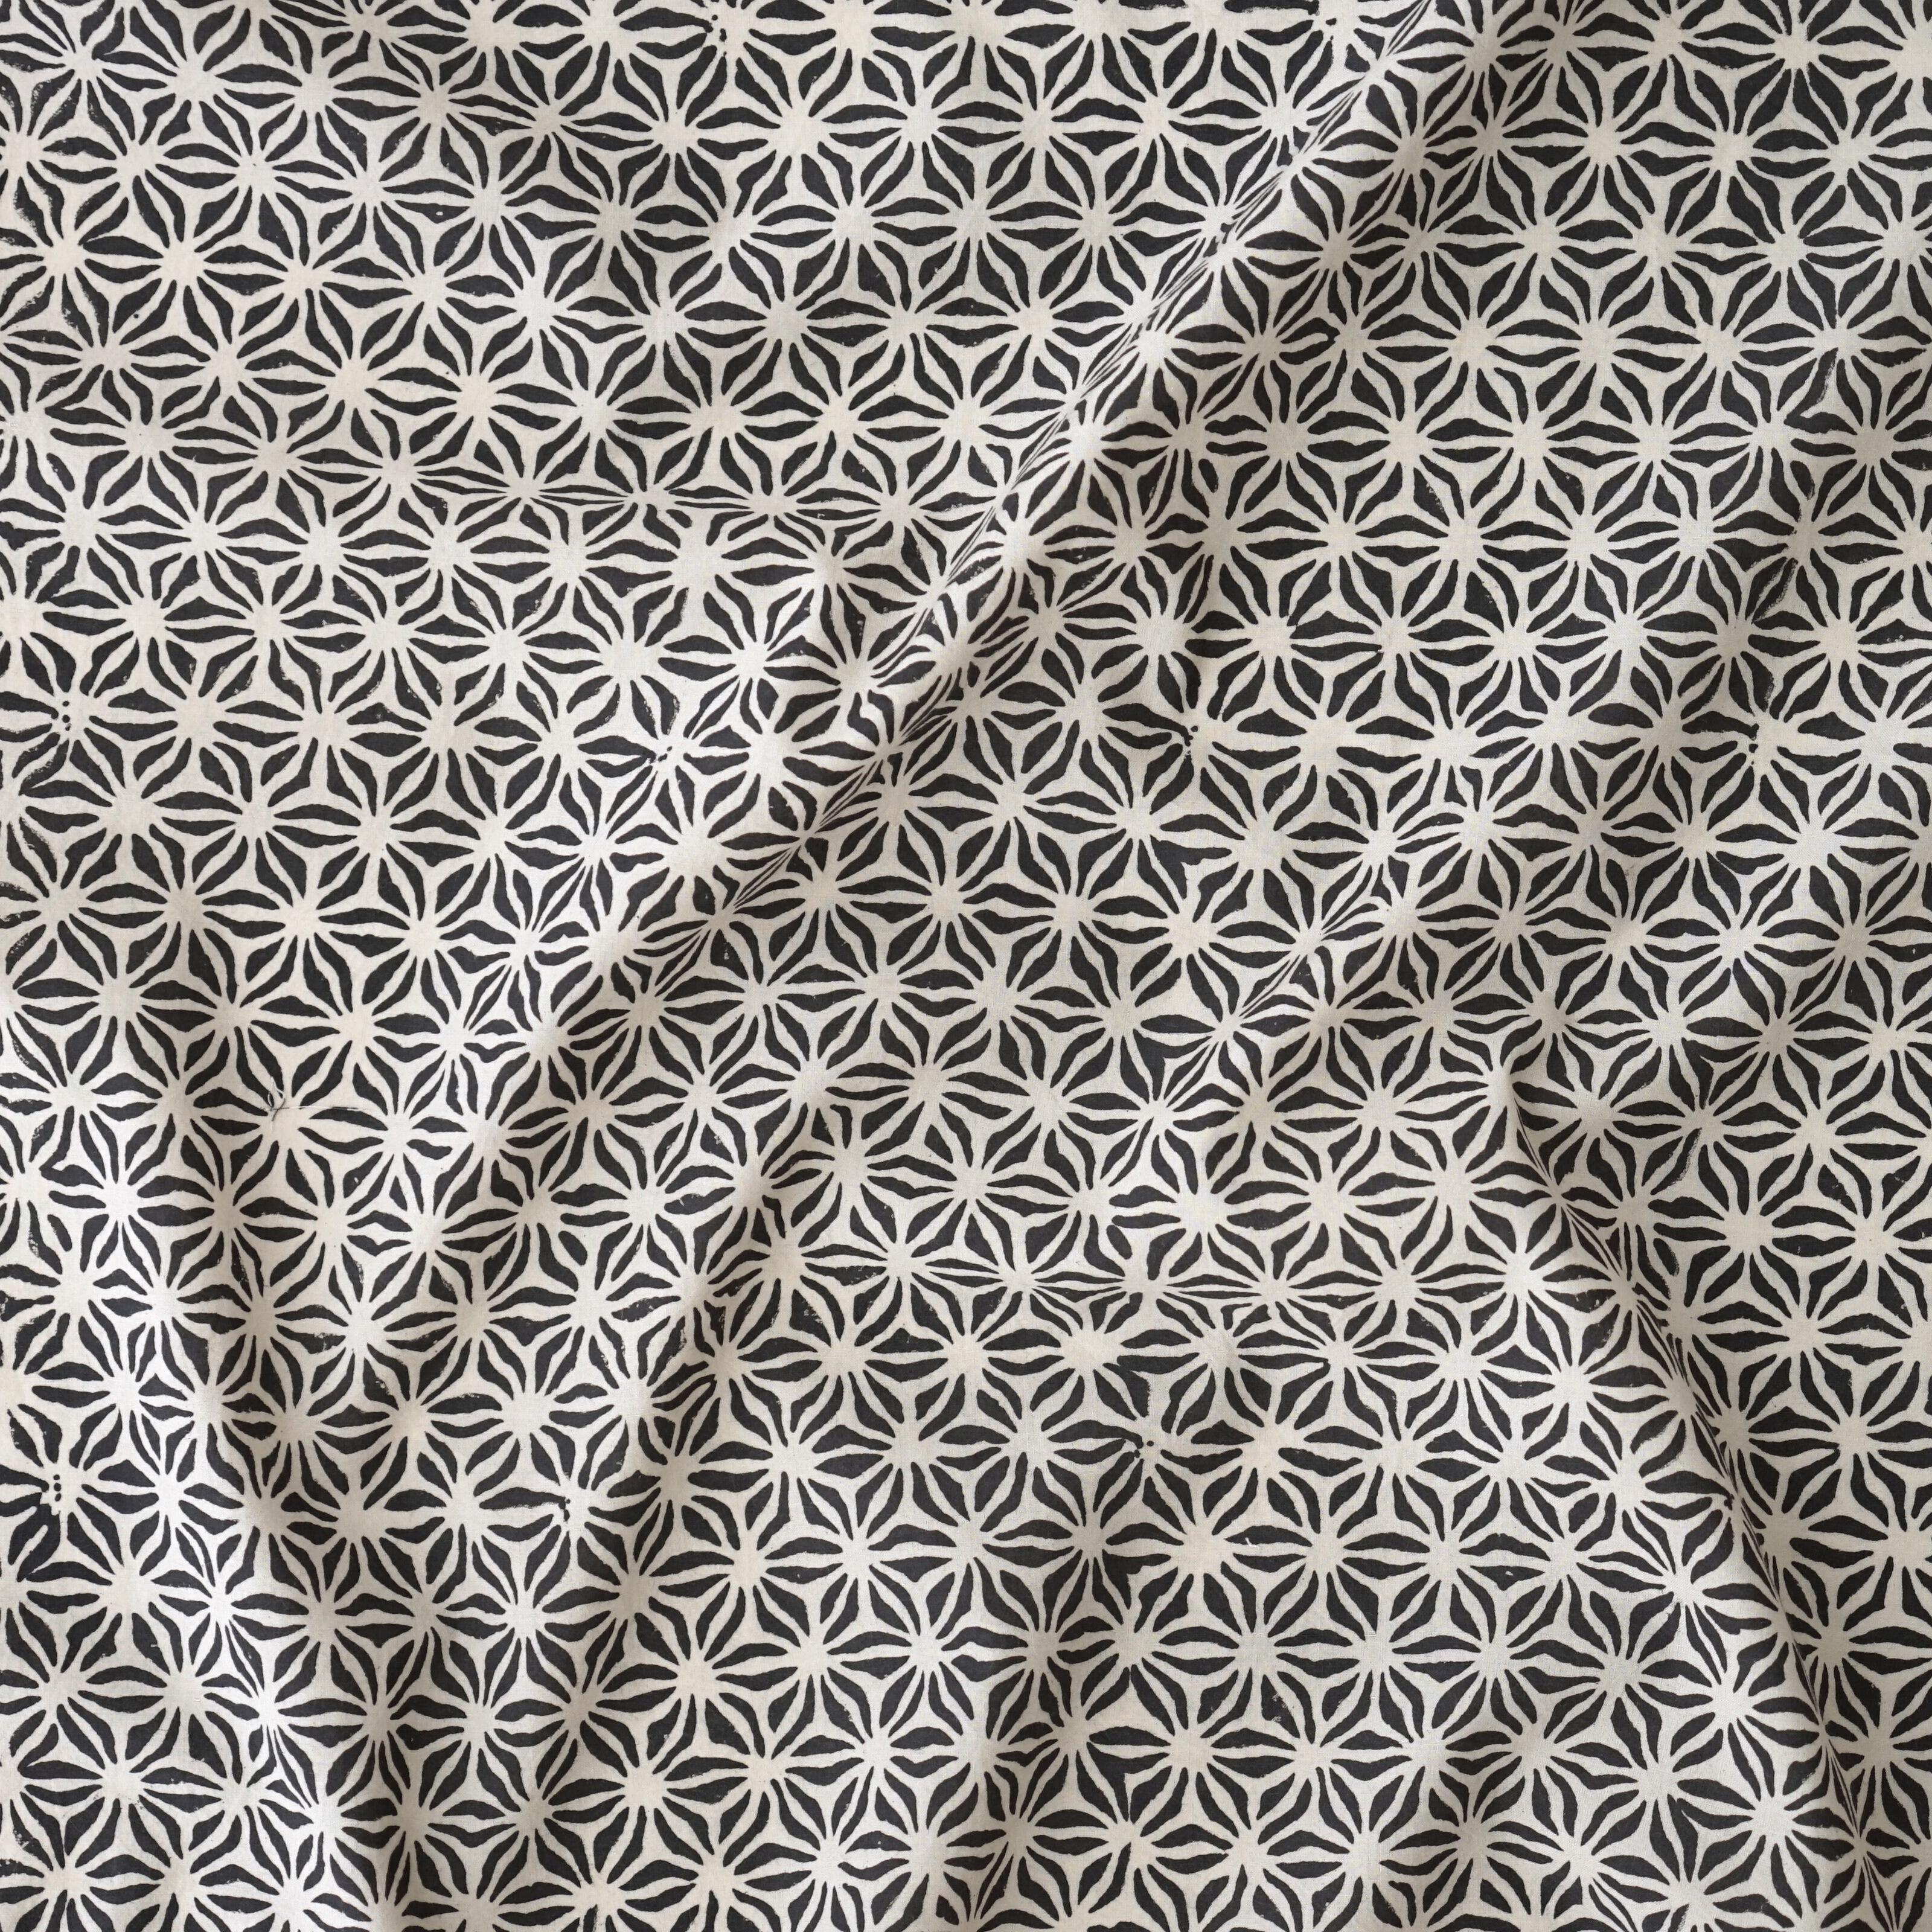 SIK20 - Block-Printed Cotton Fabric - Starfish Design - Black Iron Dye - Contrast